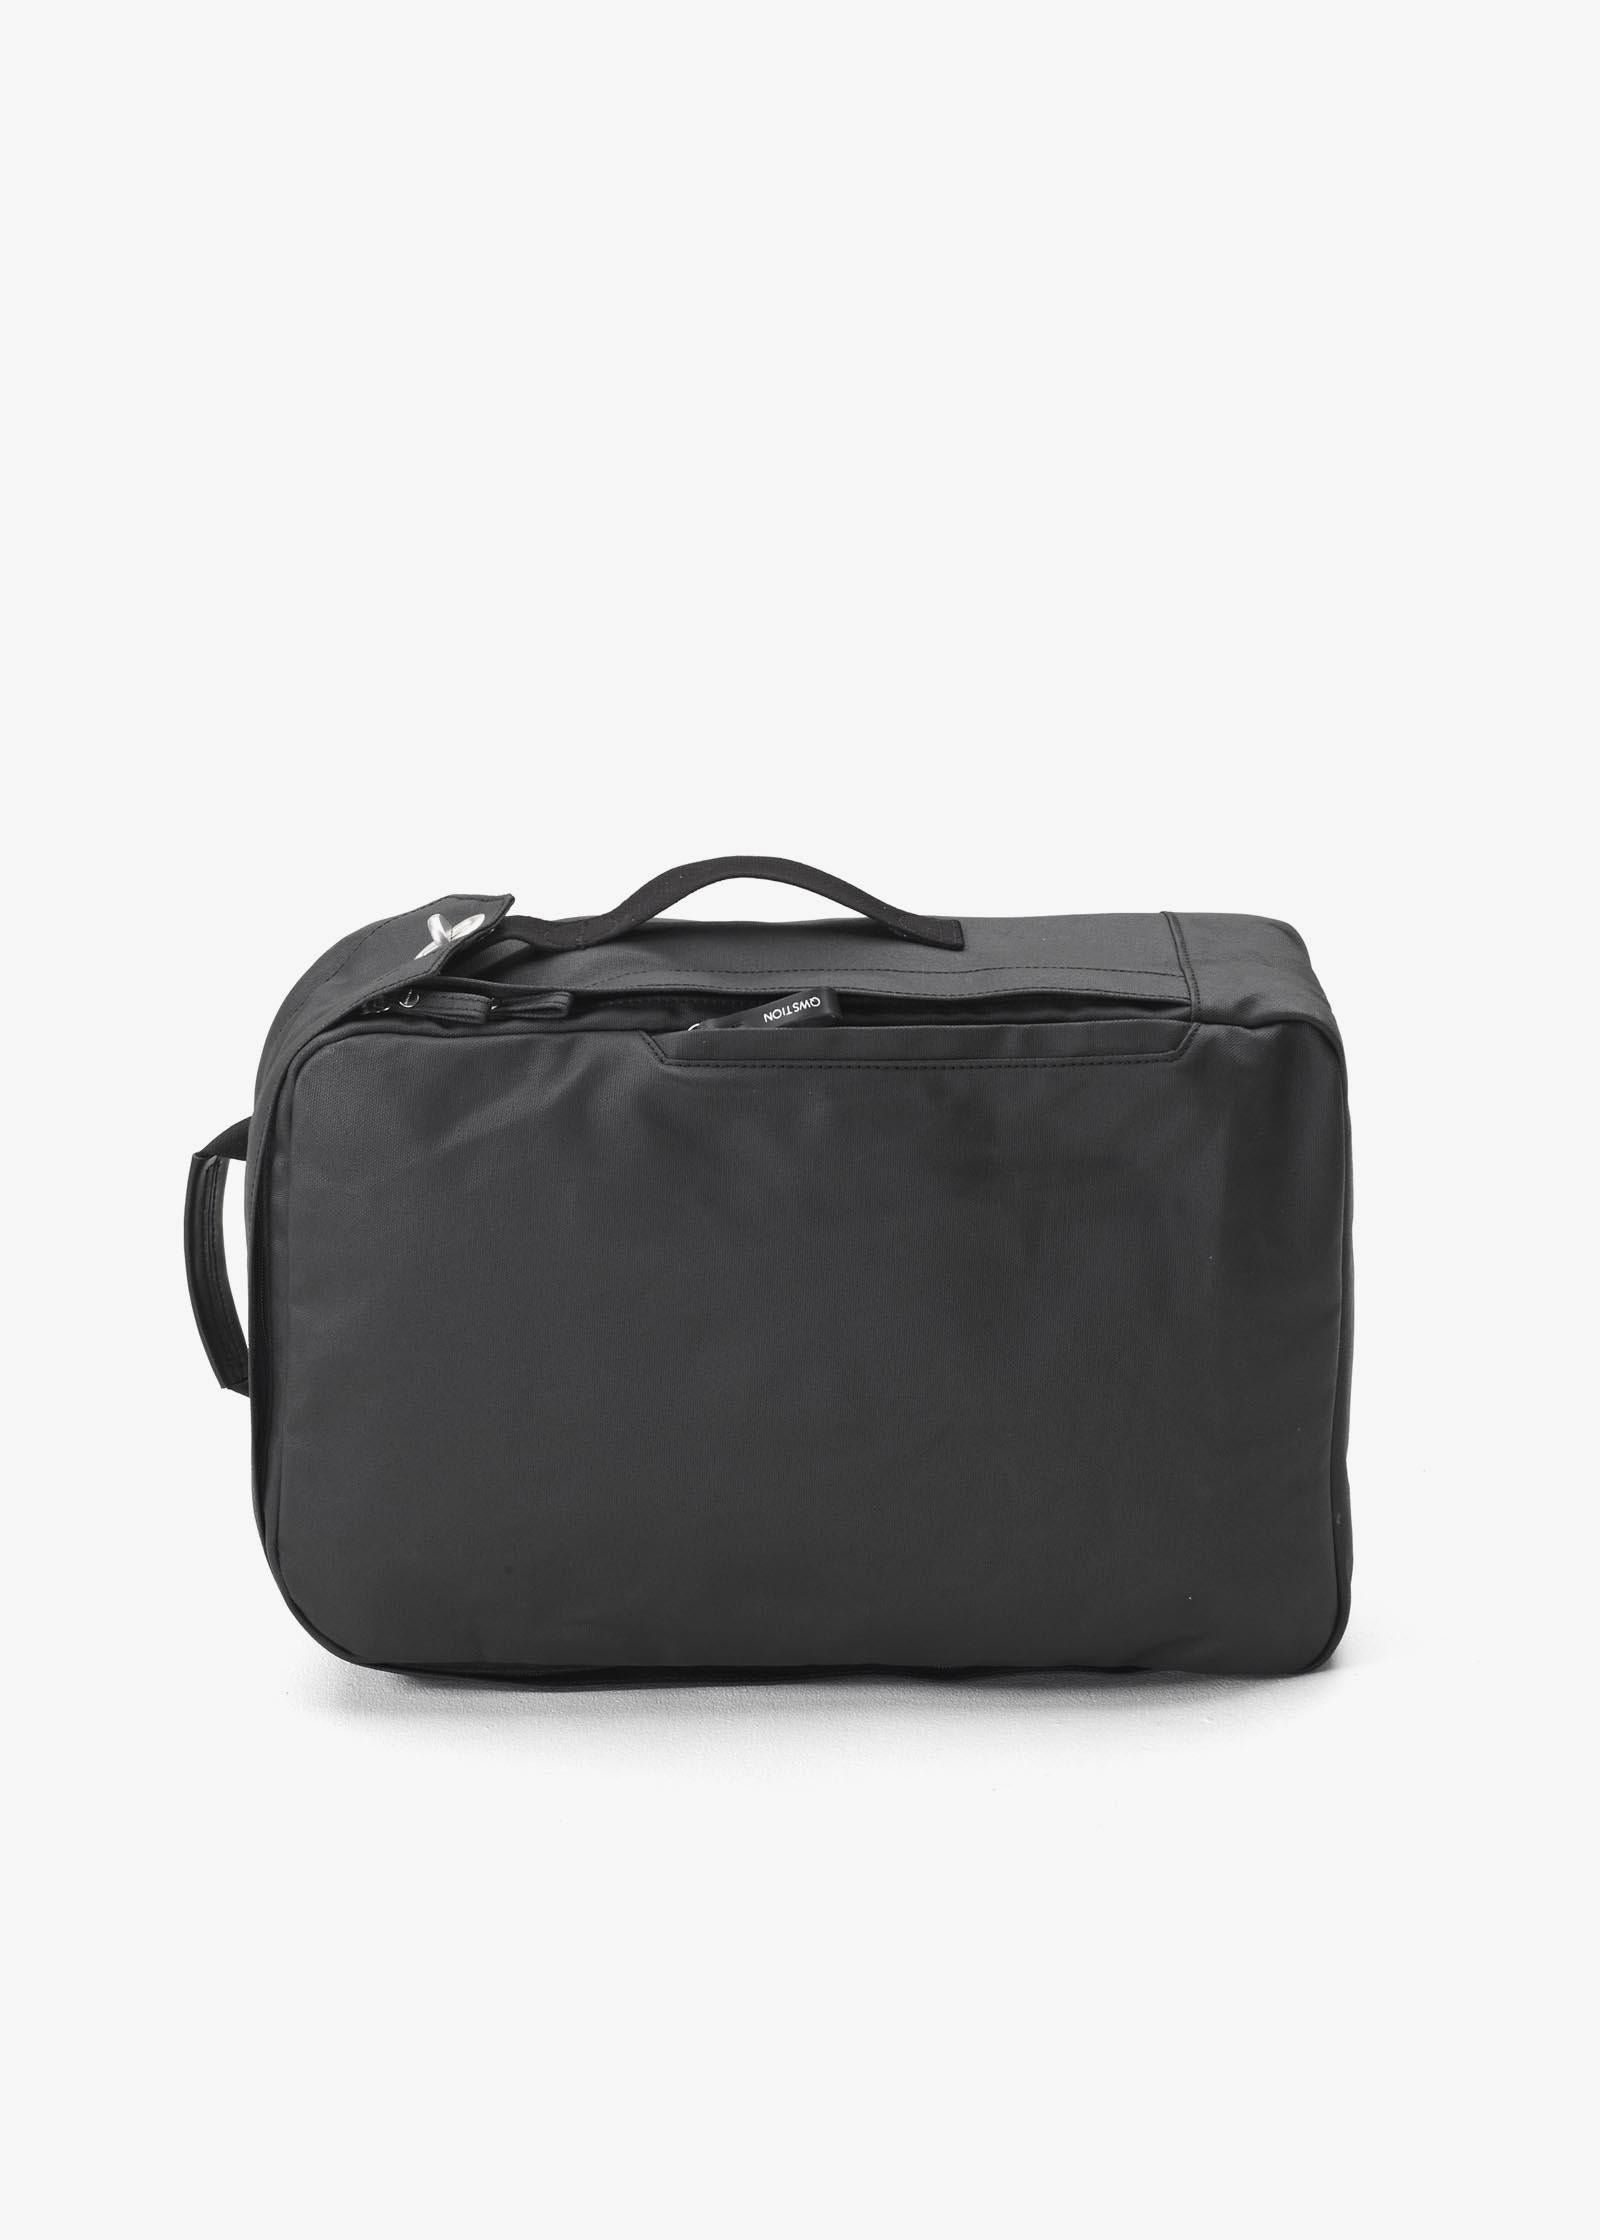 Backpack – Organic Jet Black